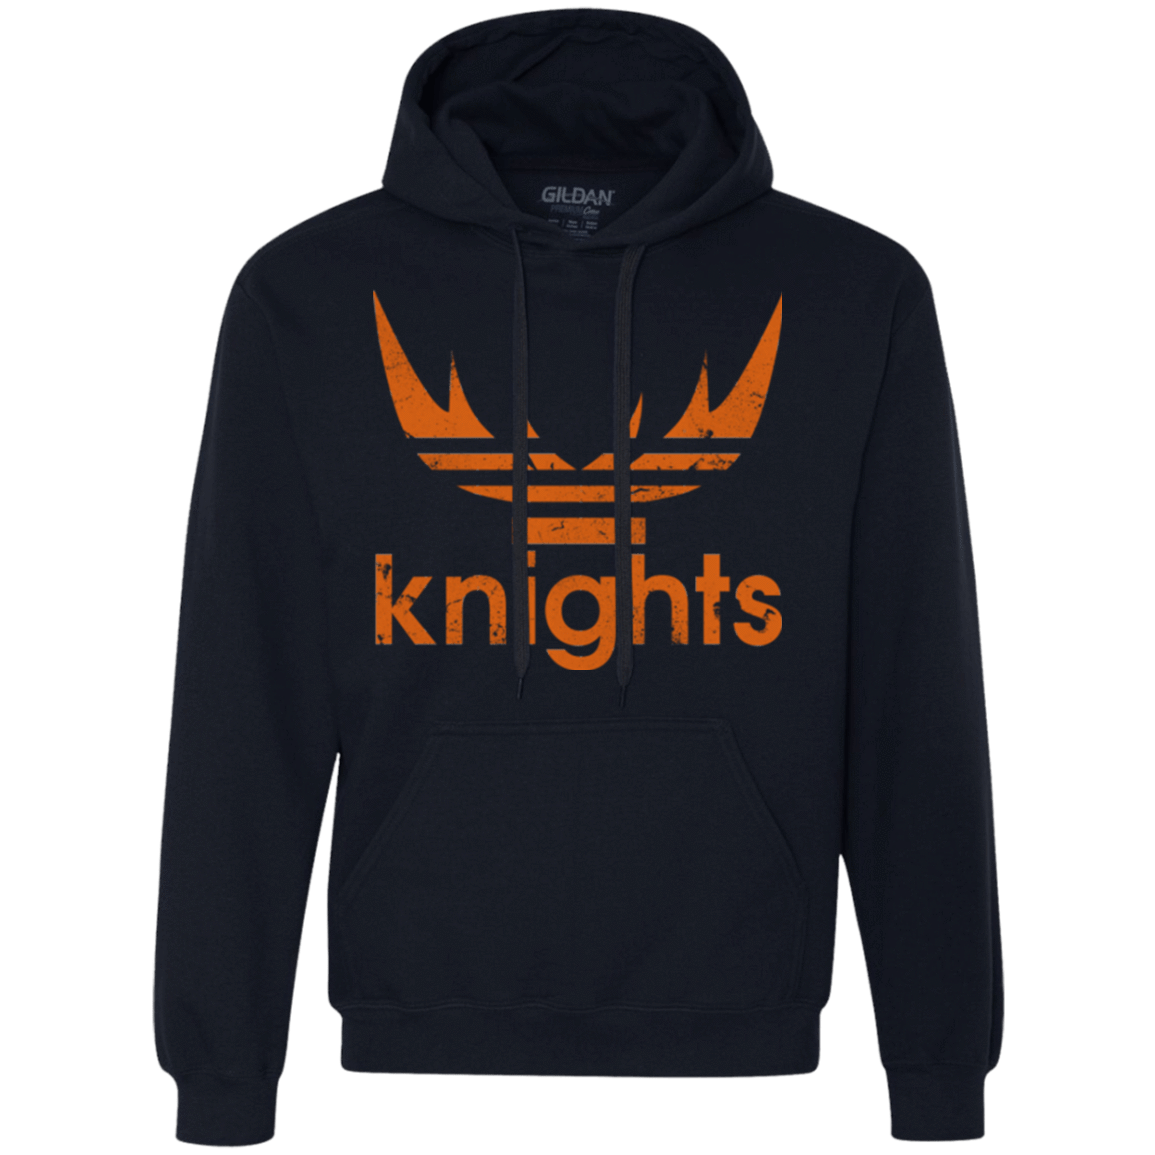 Sweatshirts Navy / Small Knights Premium Fleece Hoodie